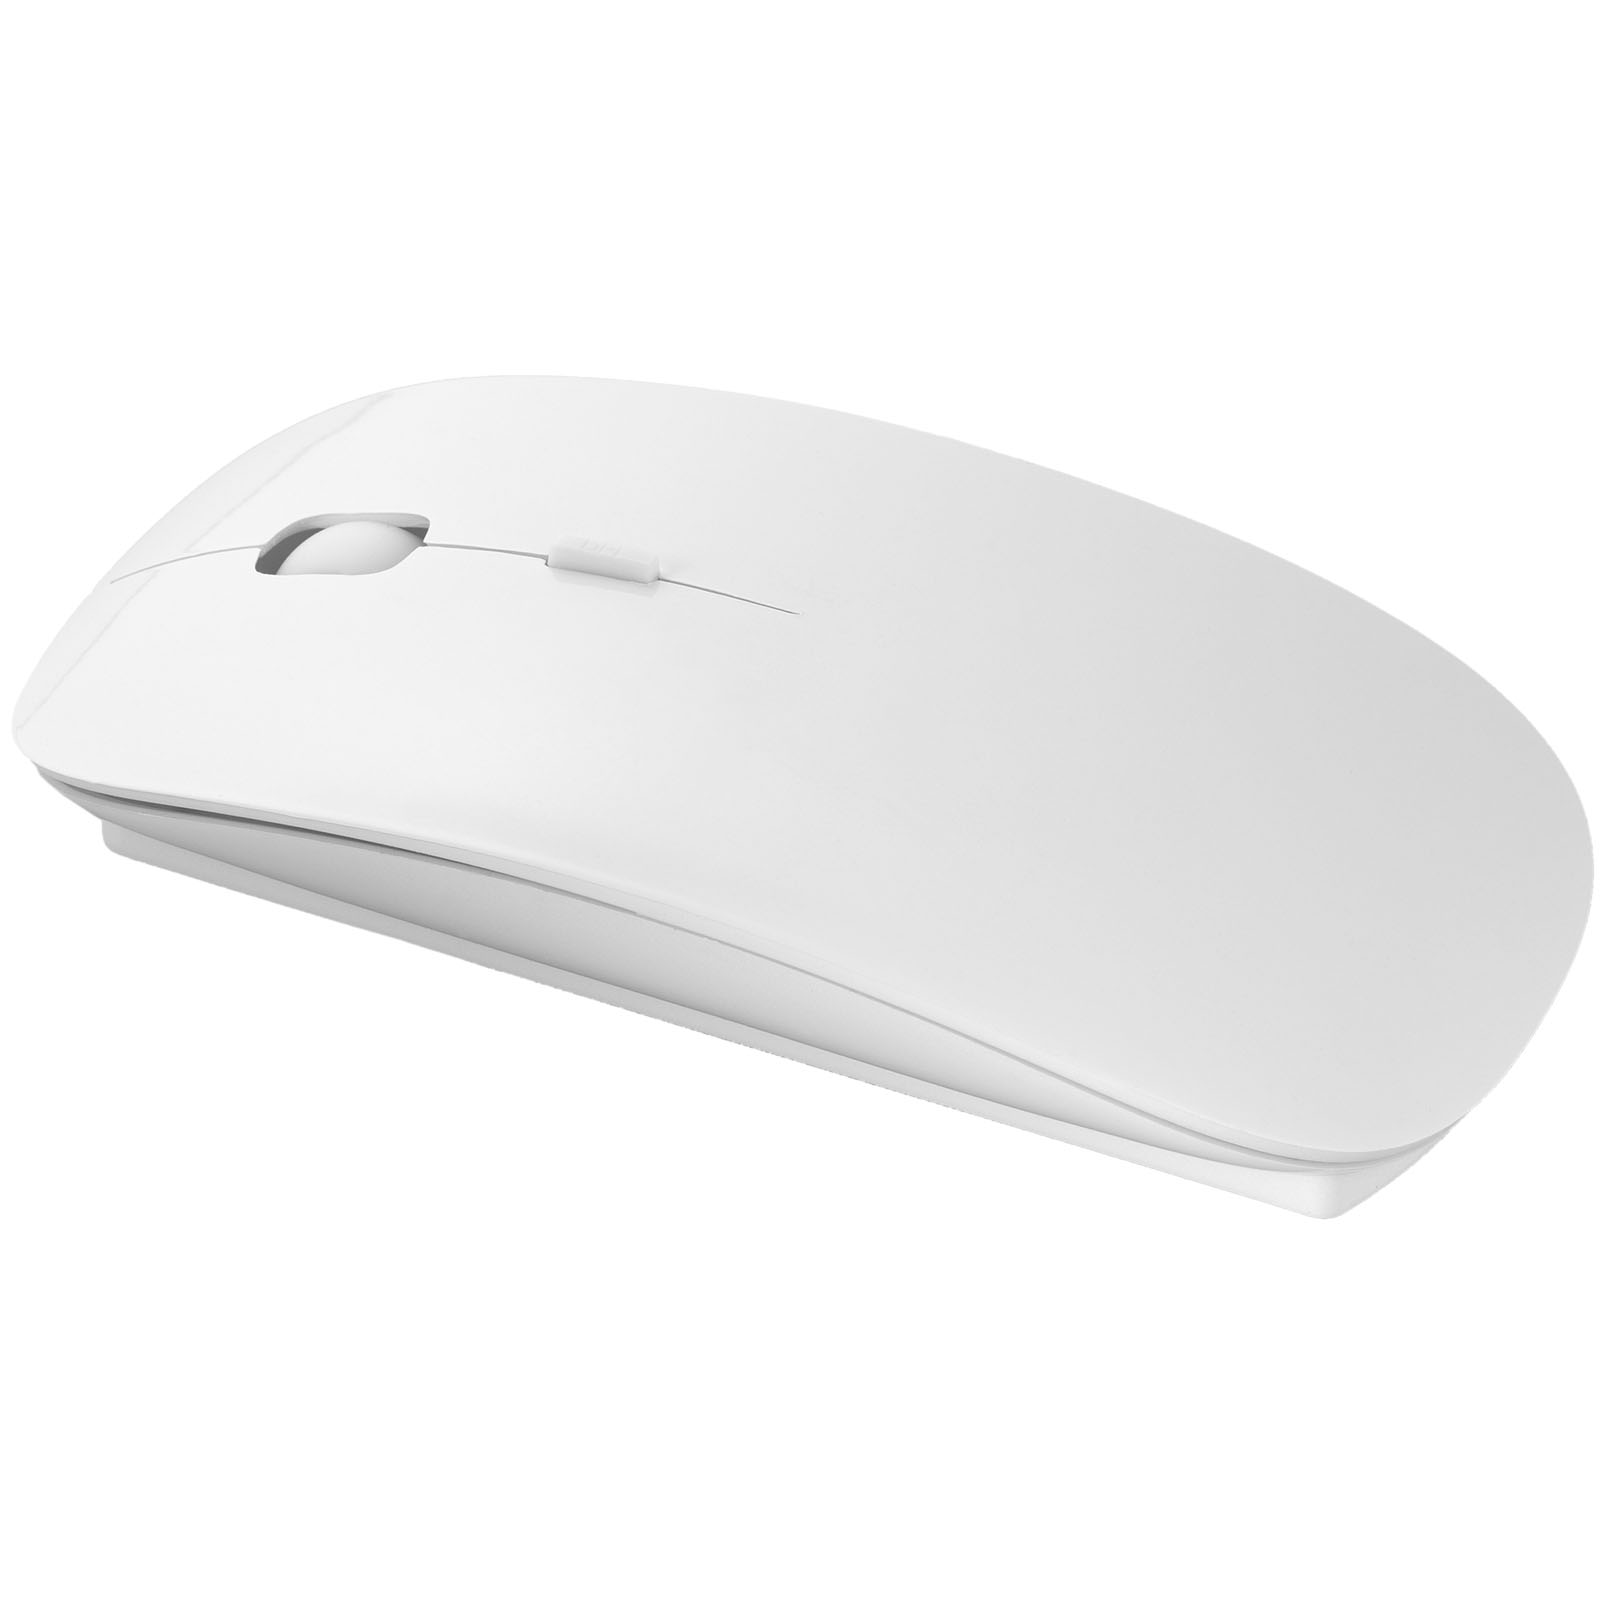 Technology - Menlo wireless mouse